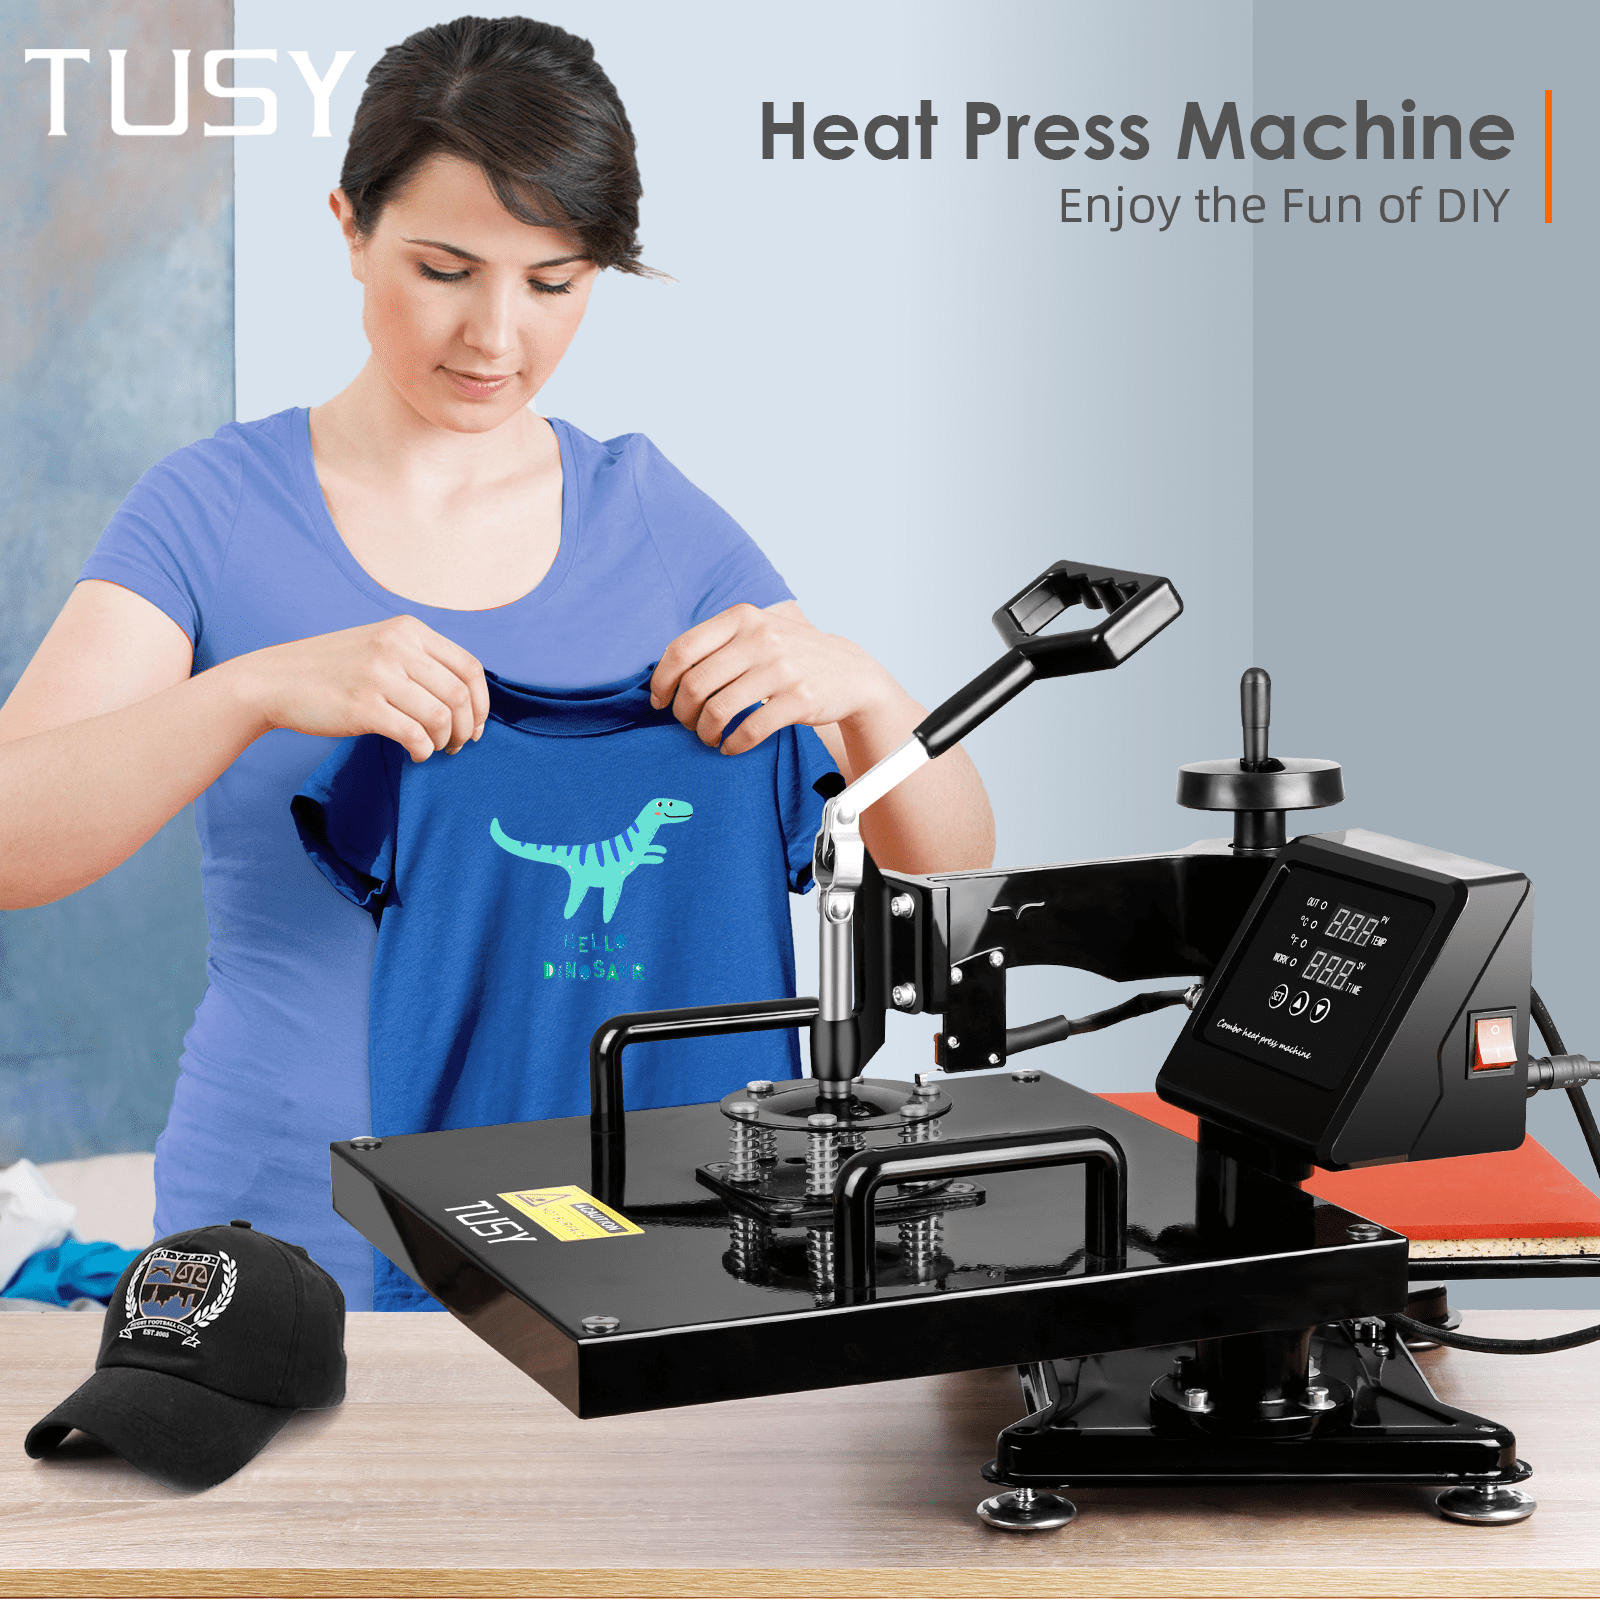  TUSY 15x15 inch Heat Press Machine, Slide Out Heat